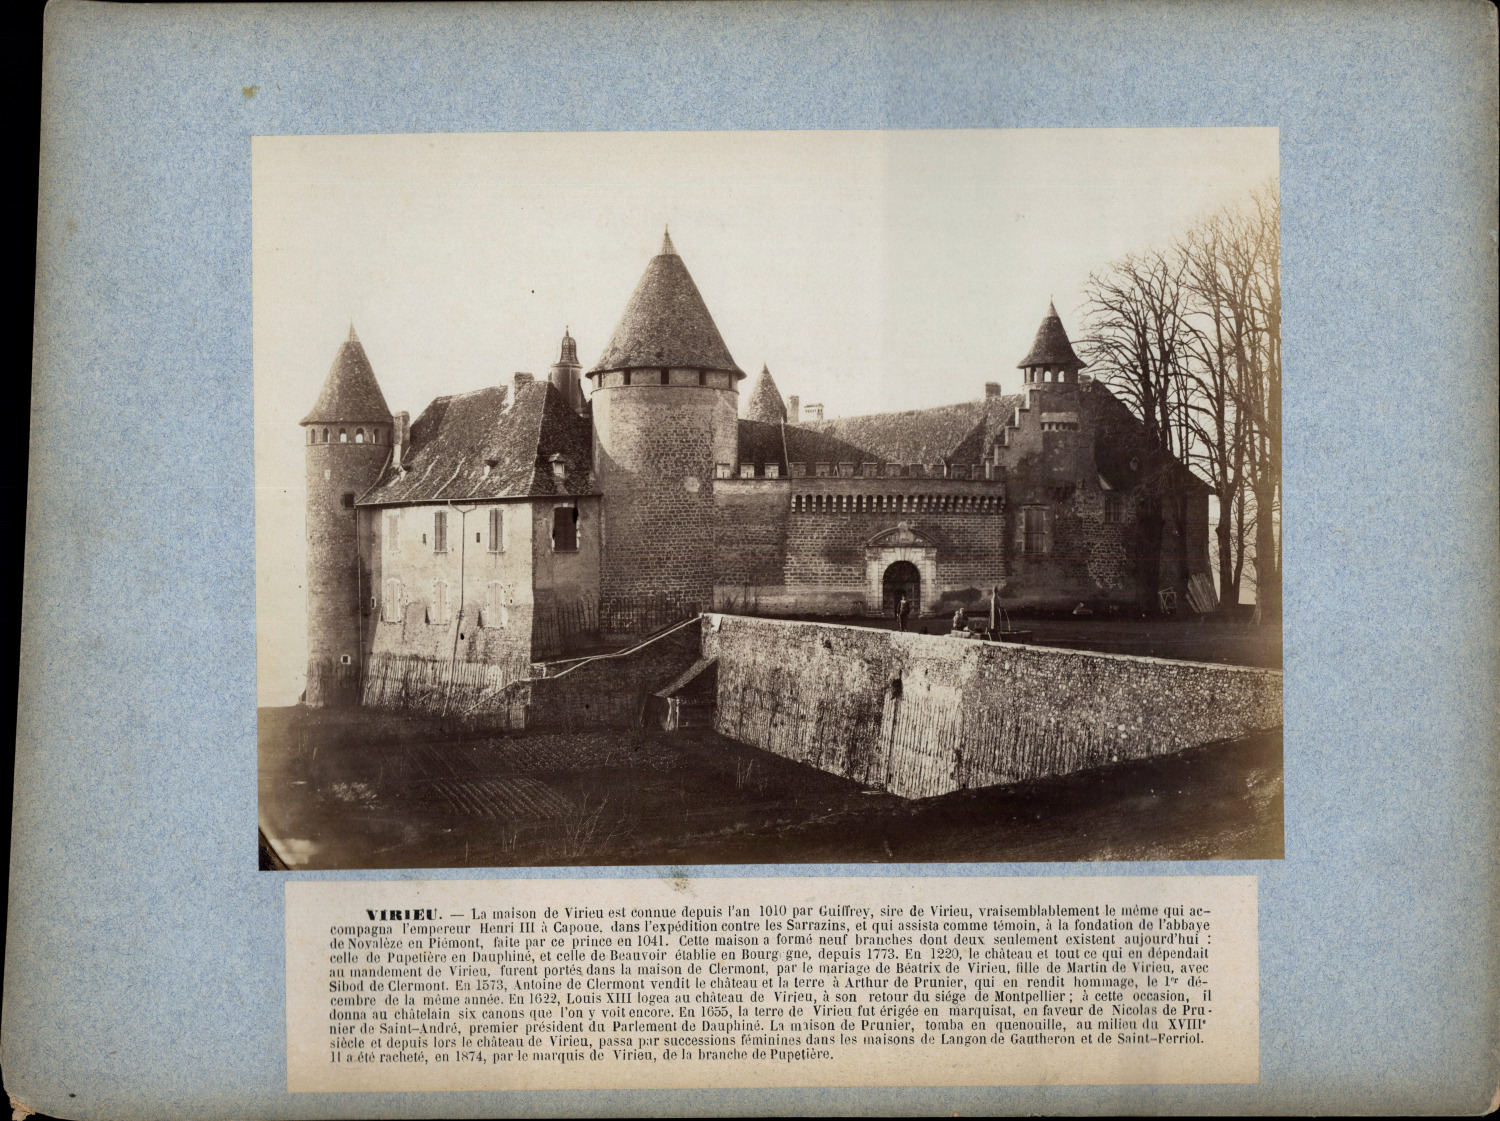 France, Val-de-Virieu, Château de Virieu vintage albumen print albumin print